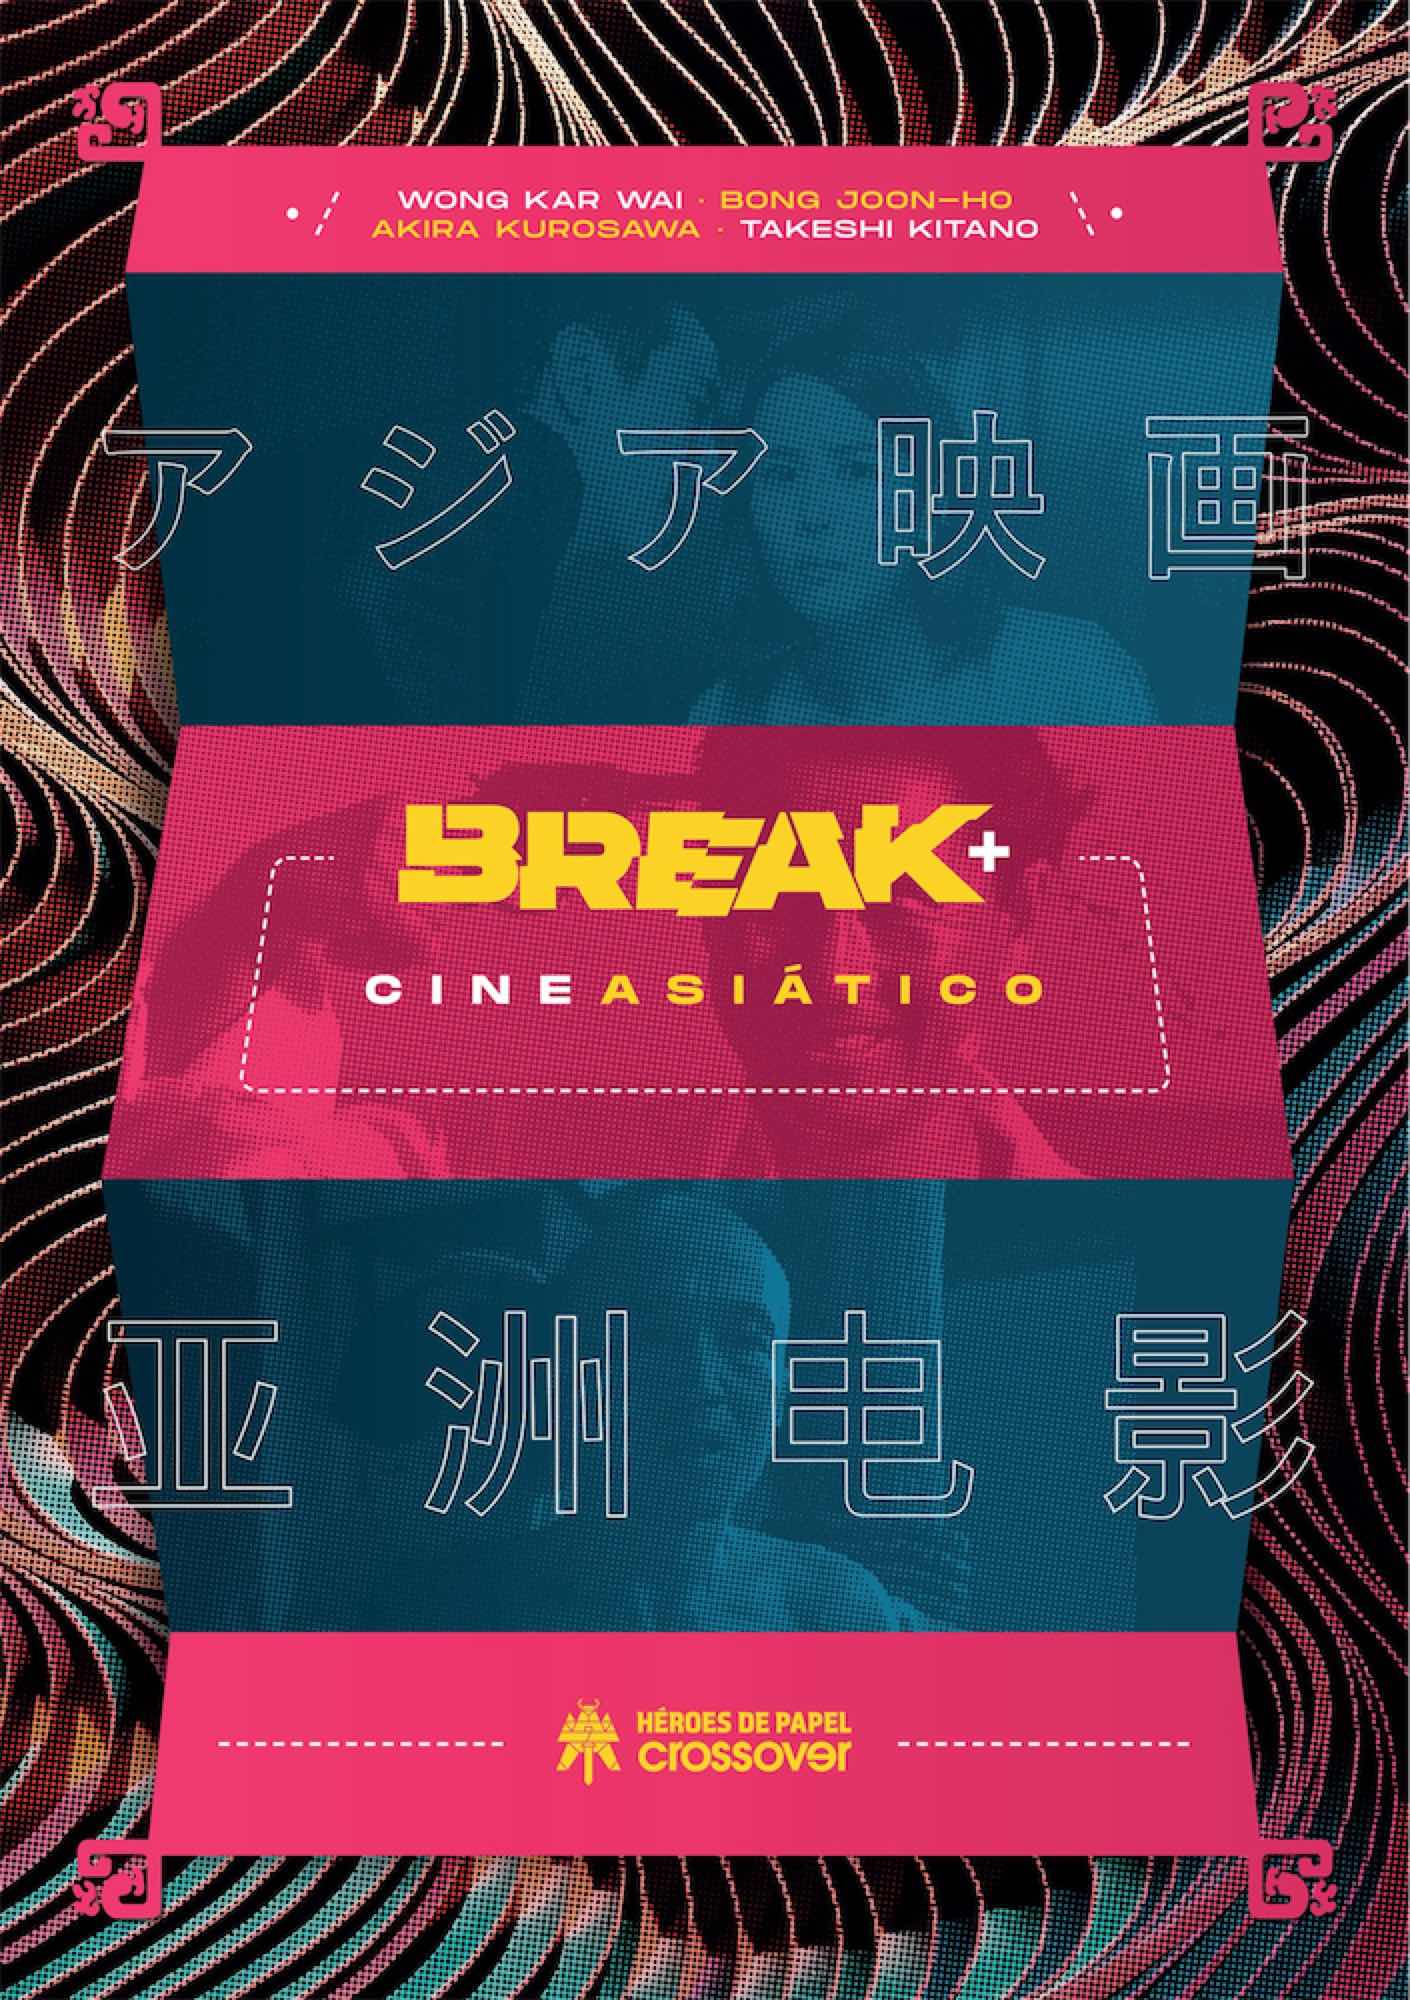 BREAK+: CINE ASIATICO